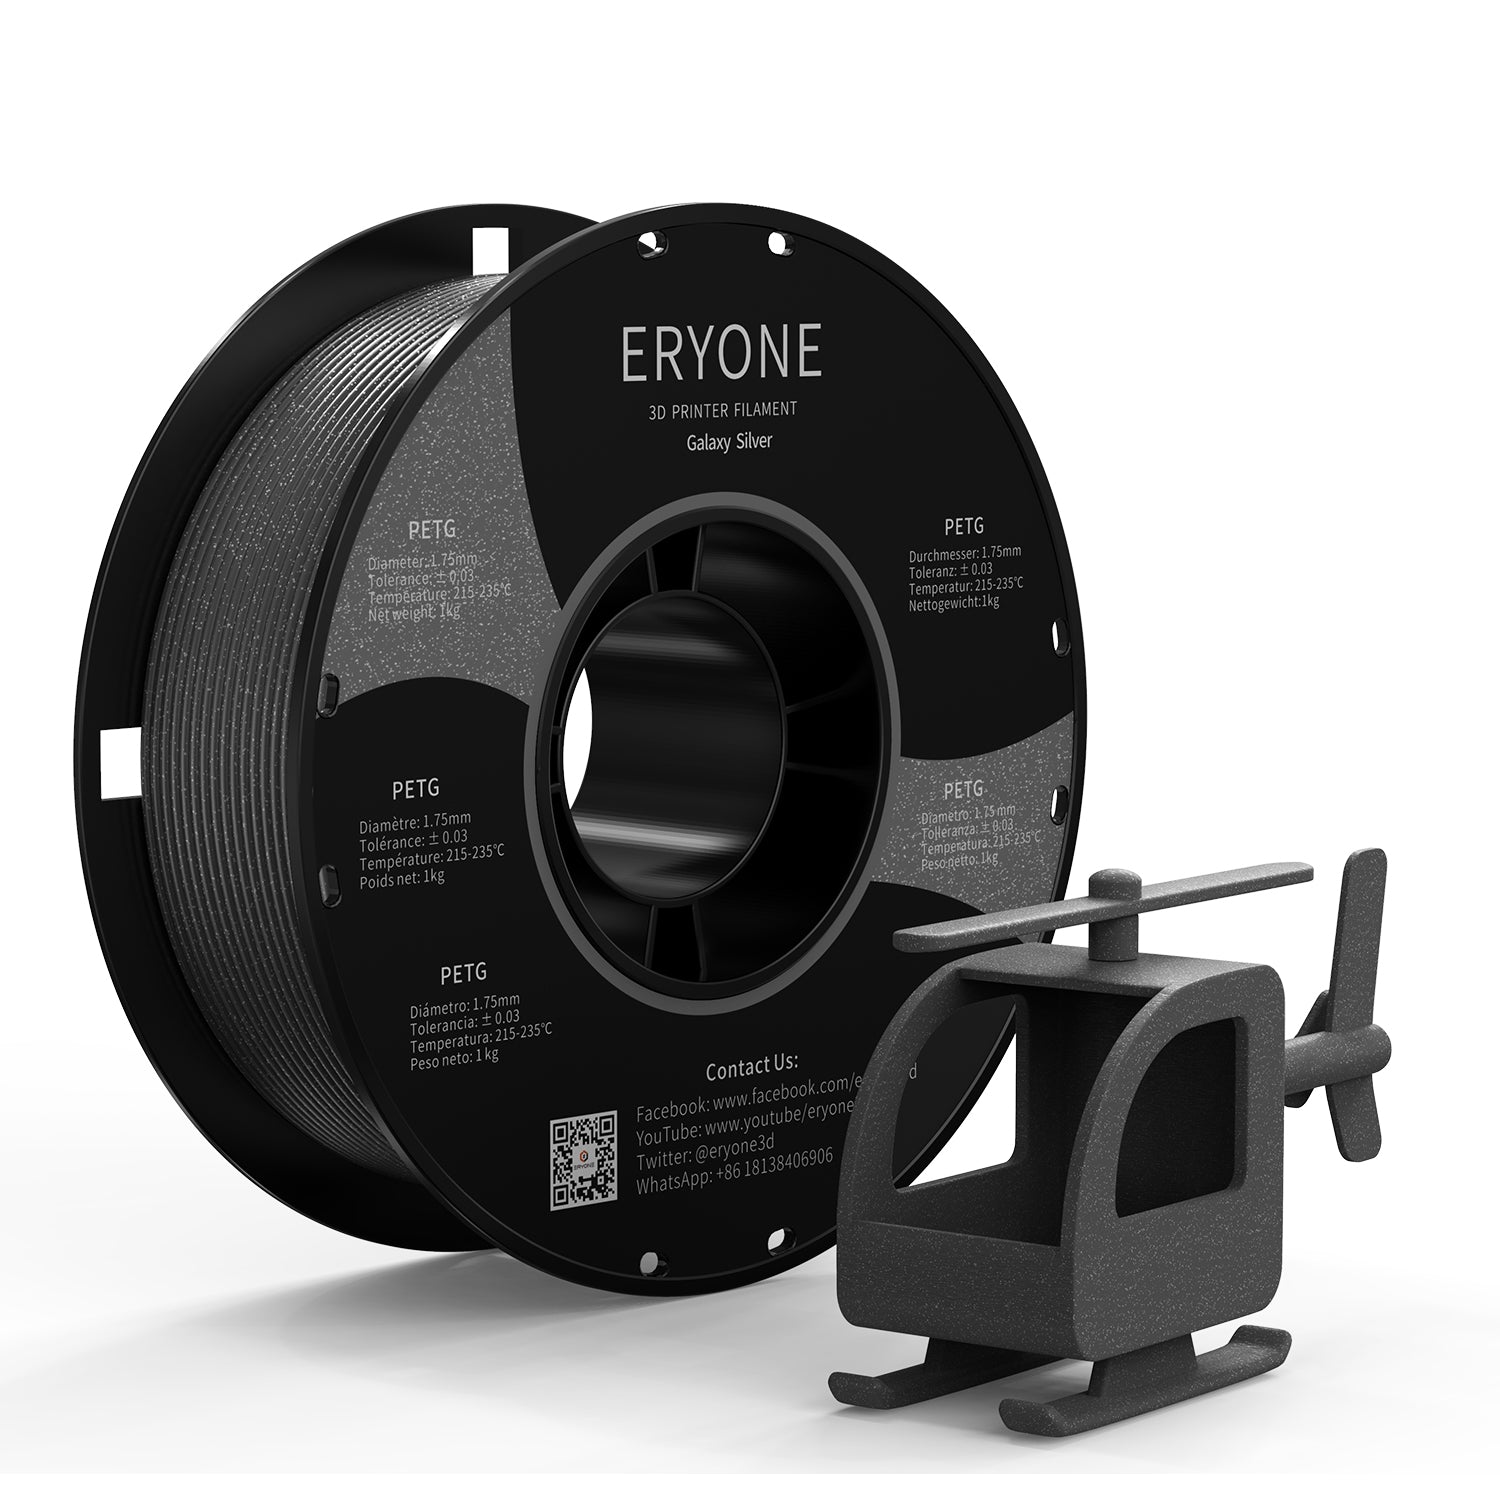 ERYONE Galaxy PETG 3D Printer Filament 1.75mm, Dimensional Accuracy +/- 0.05 mm, 1kg (2.2LBS) / Spool